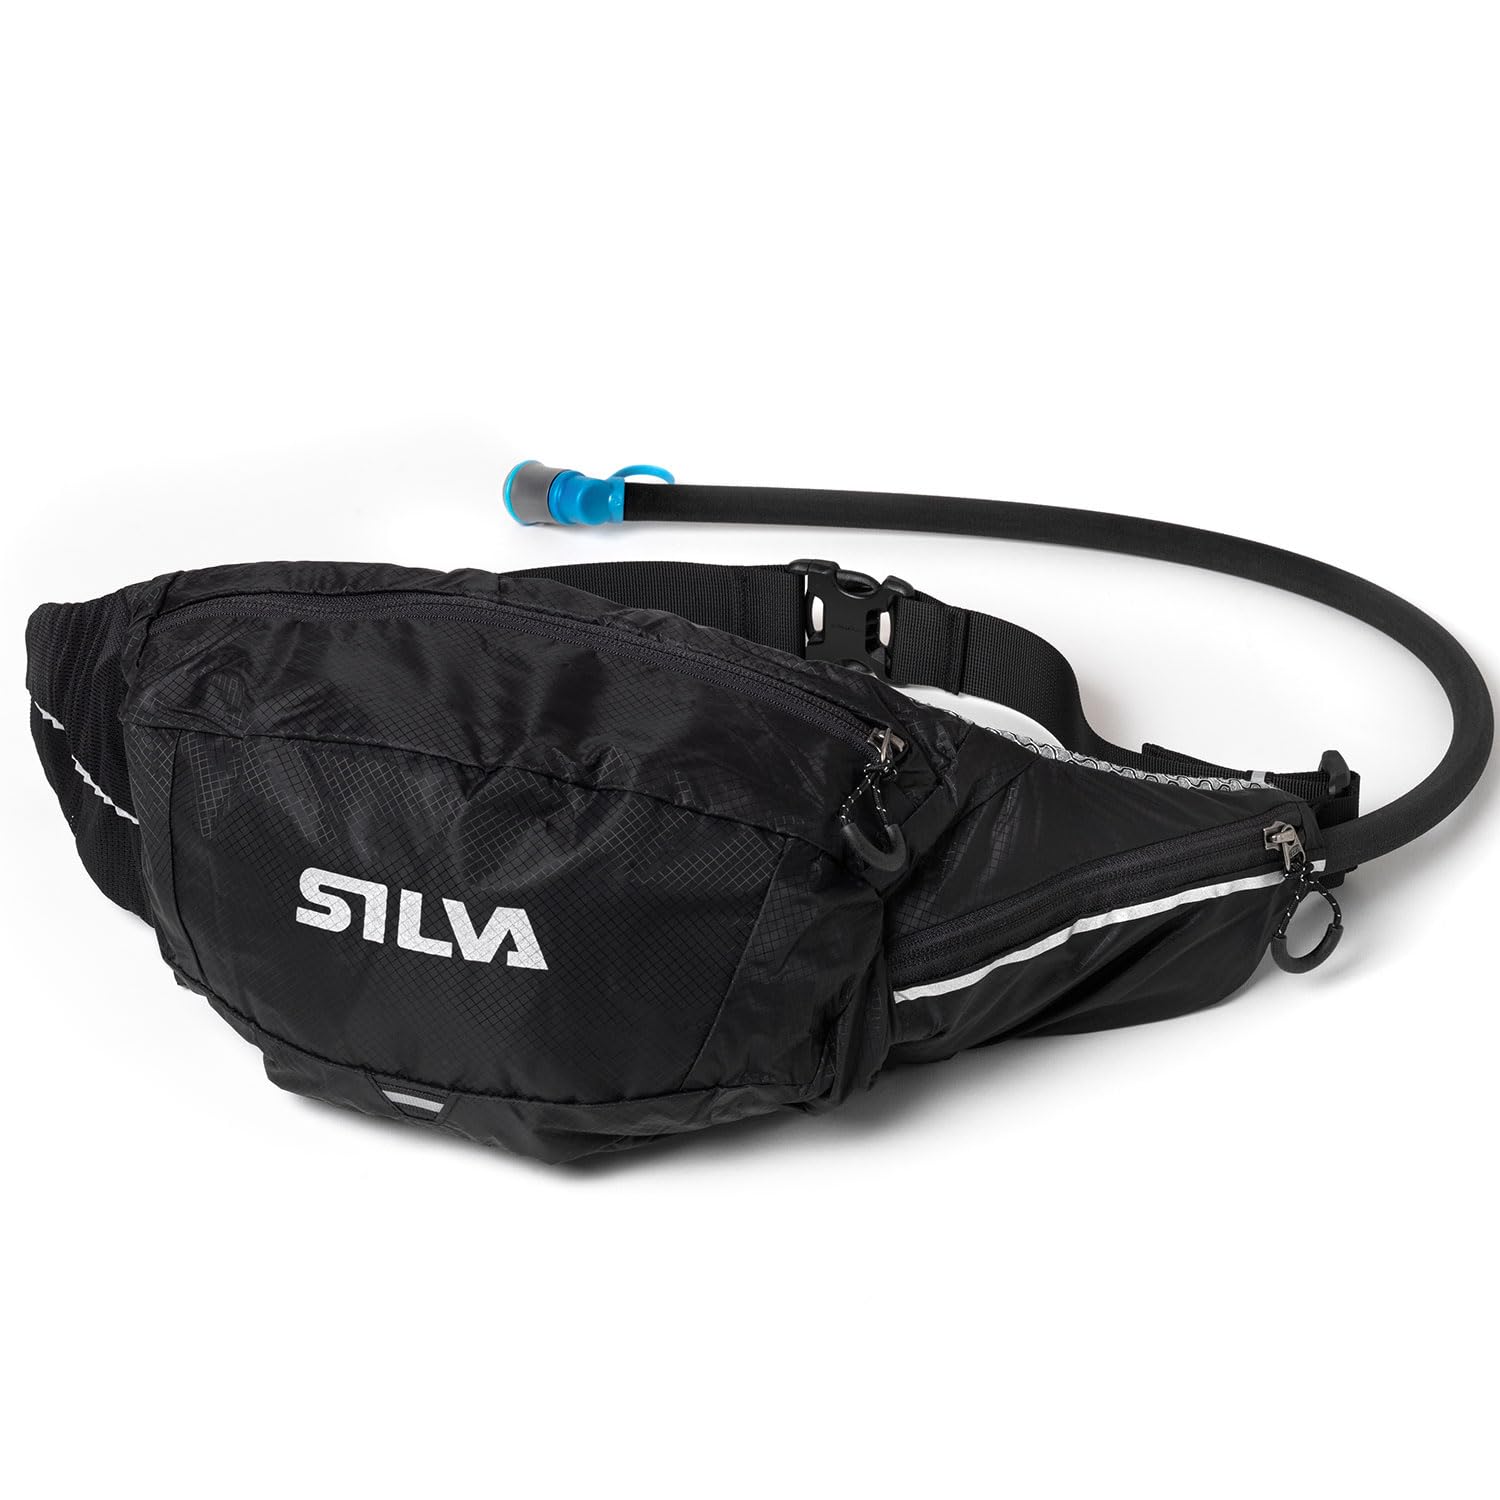 Silva Race 4X Trinkgürtel schwarz